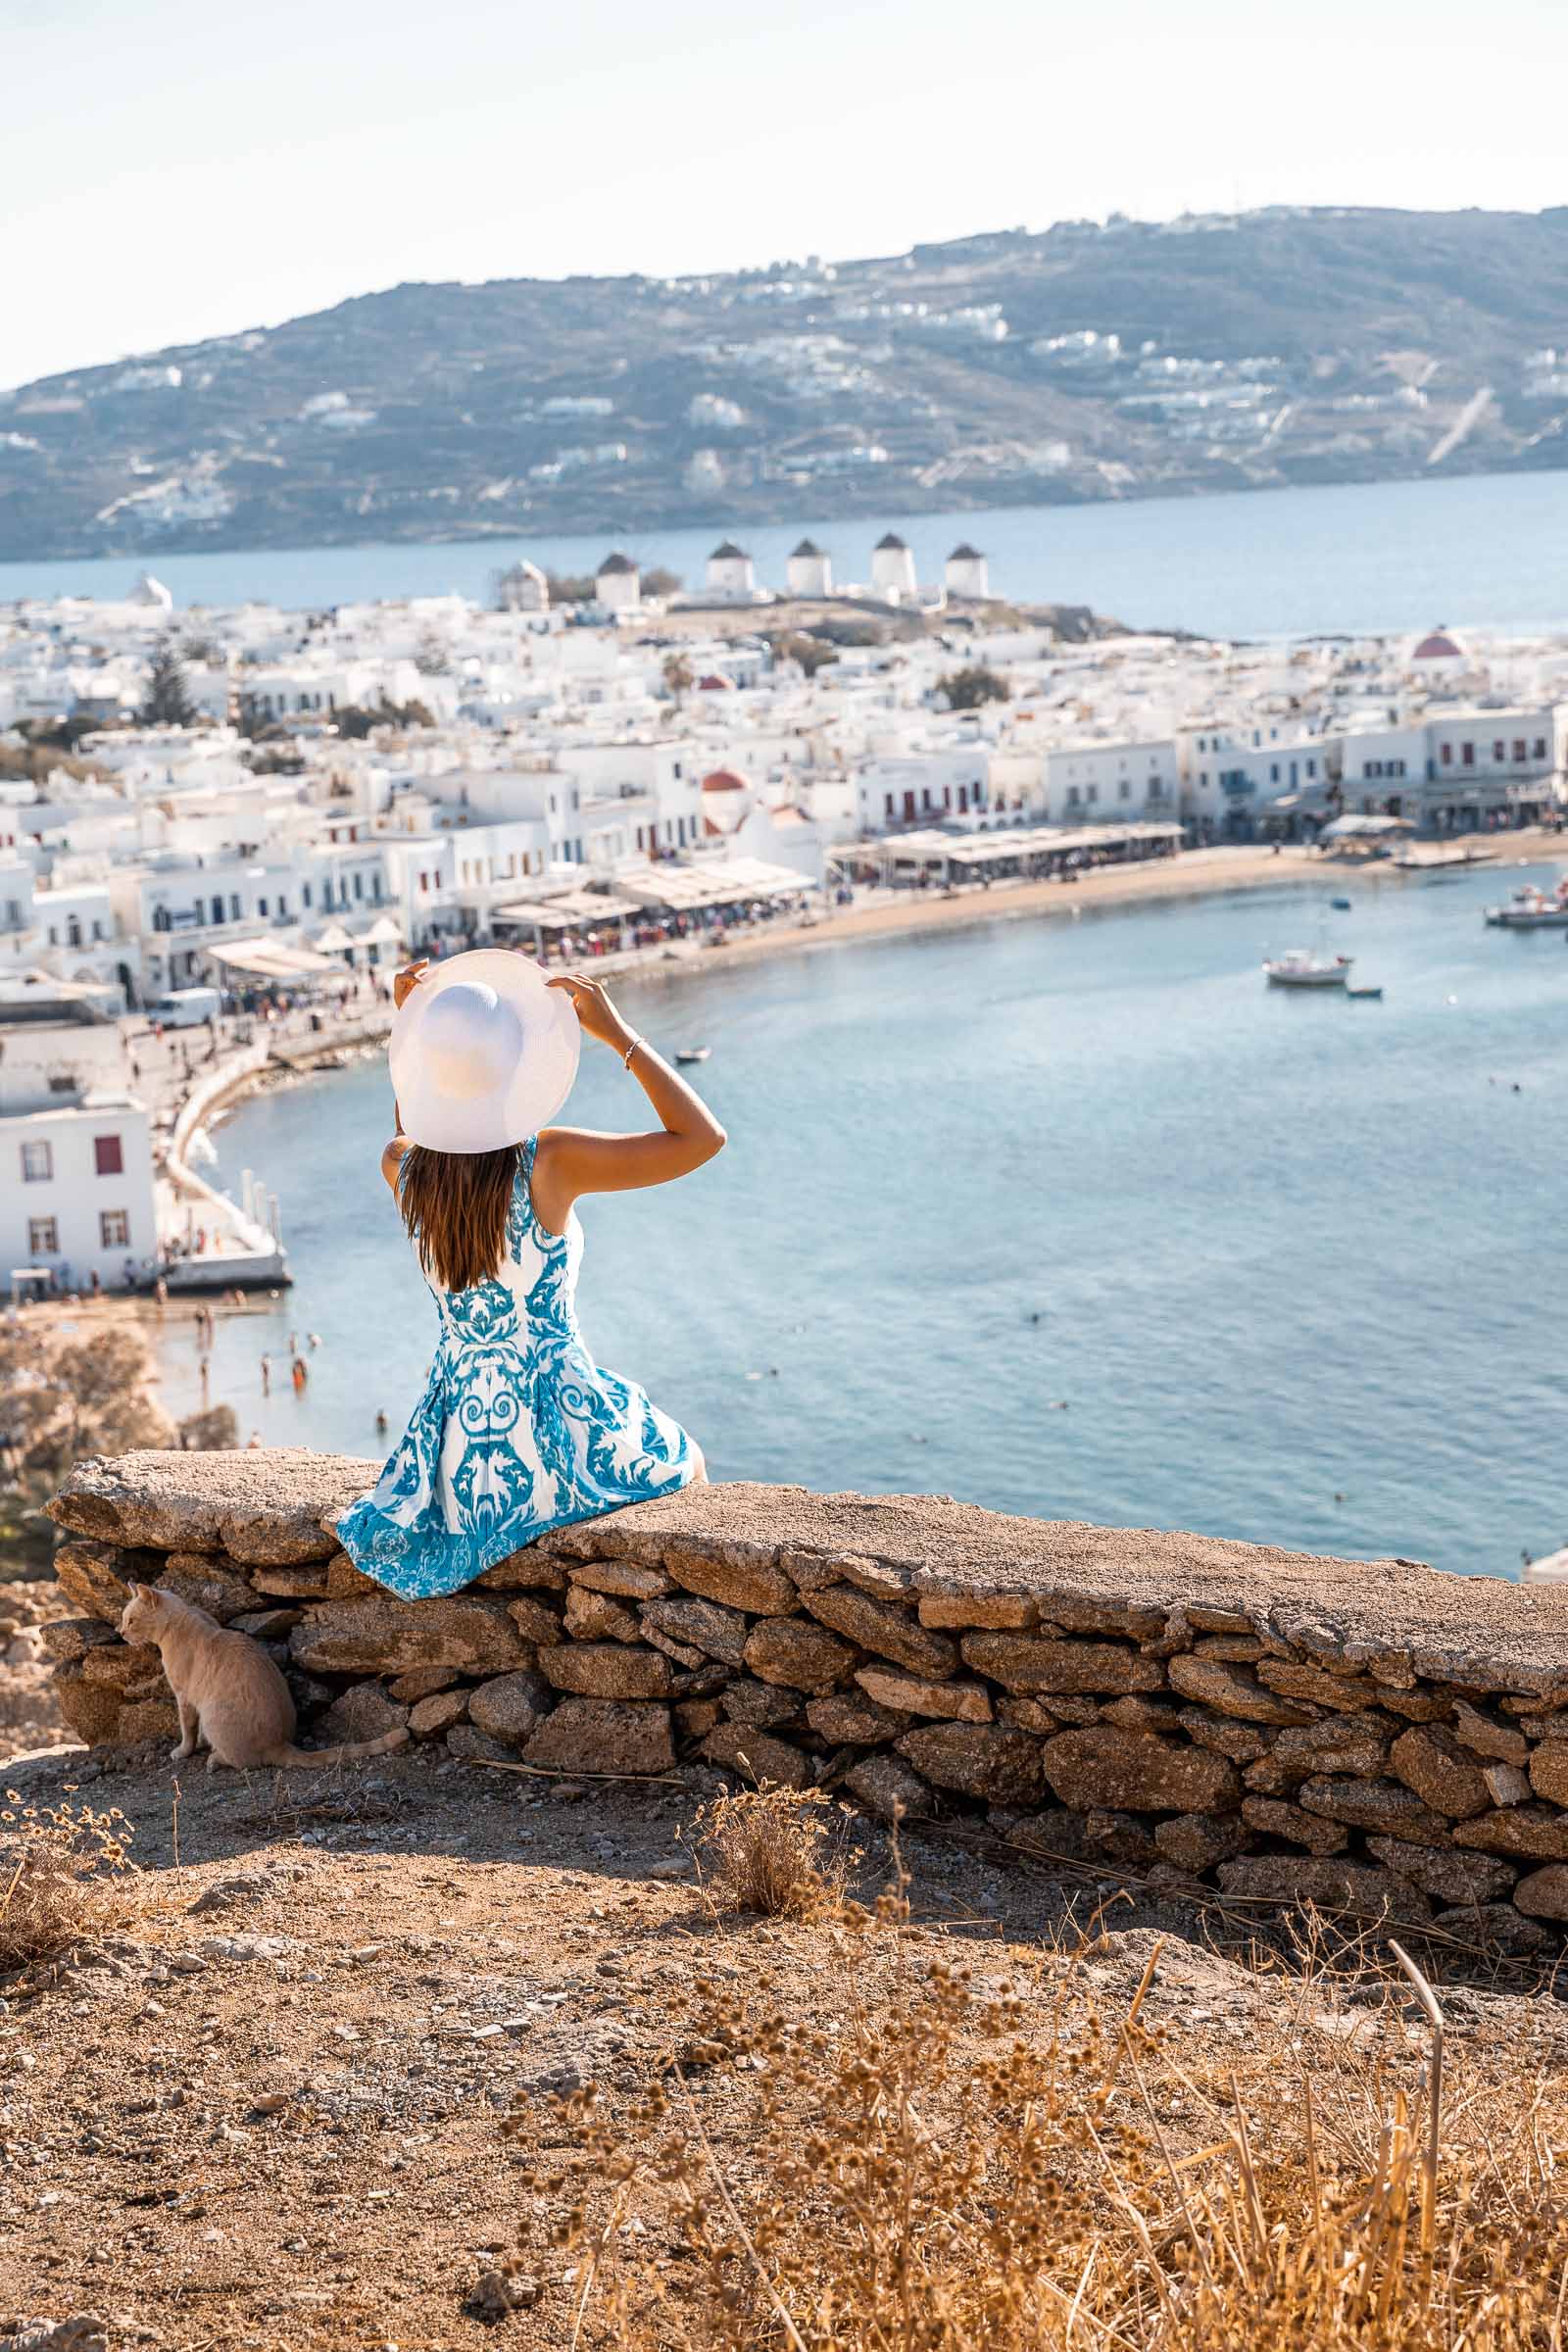 View of Mykonos Town in Greece